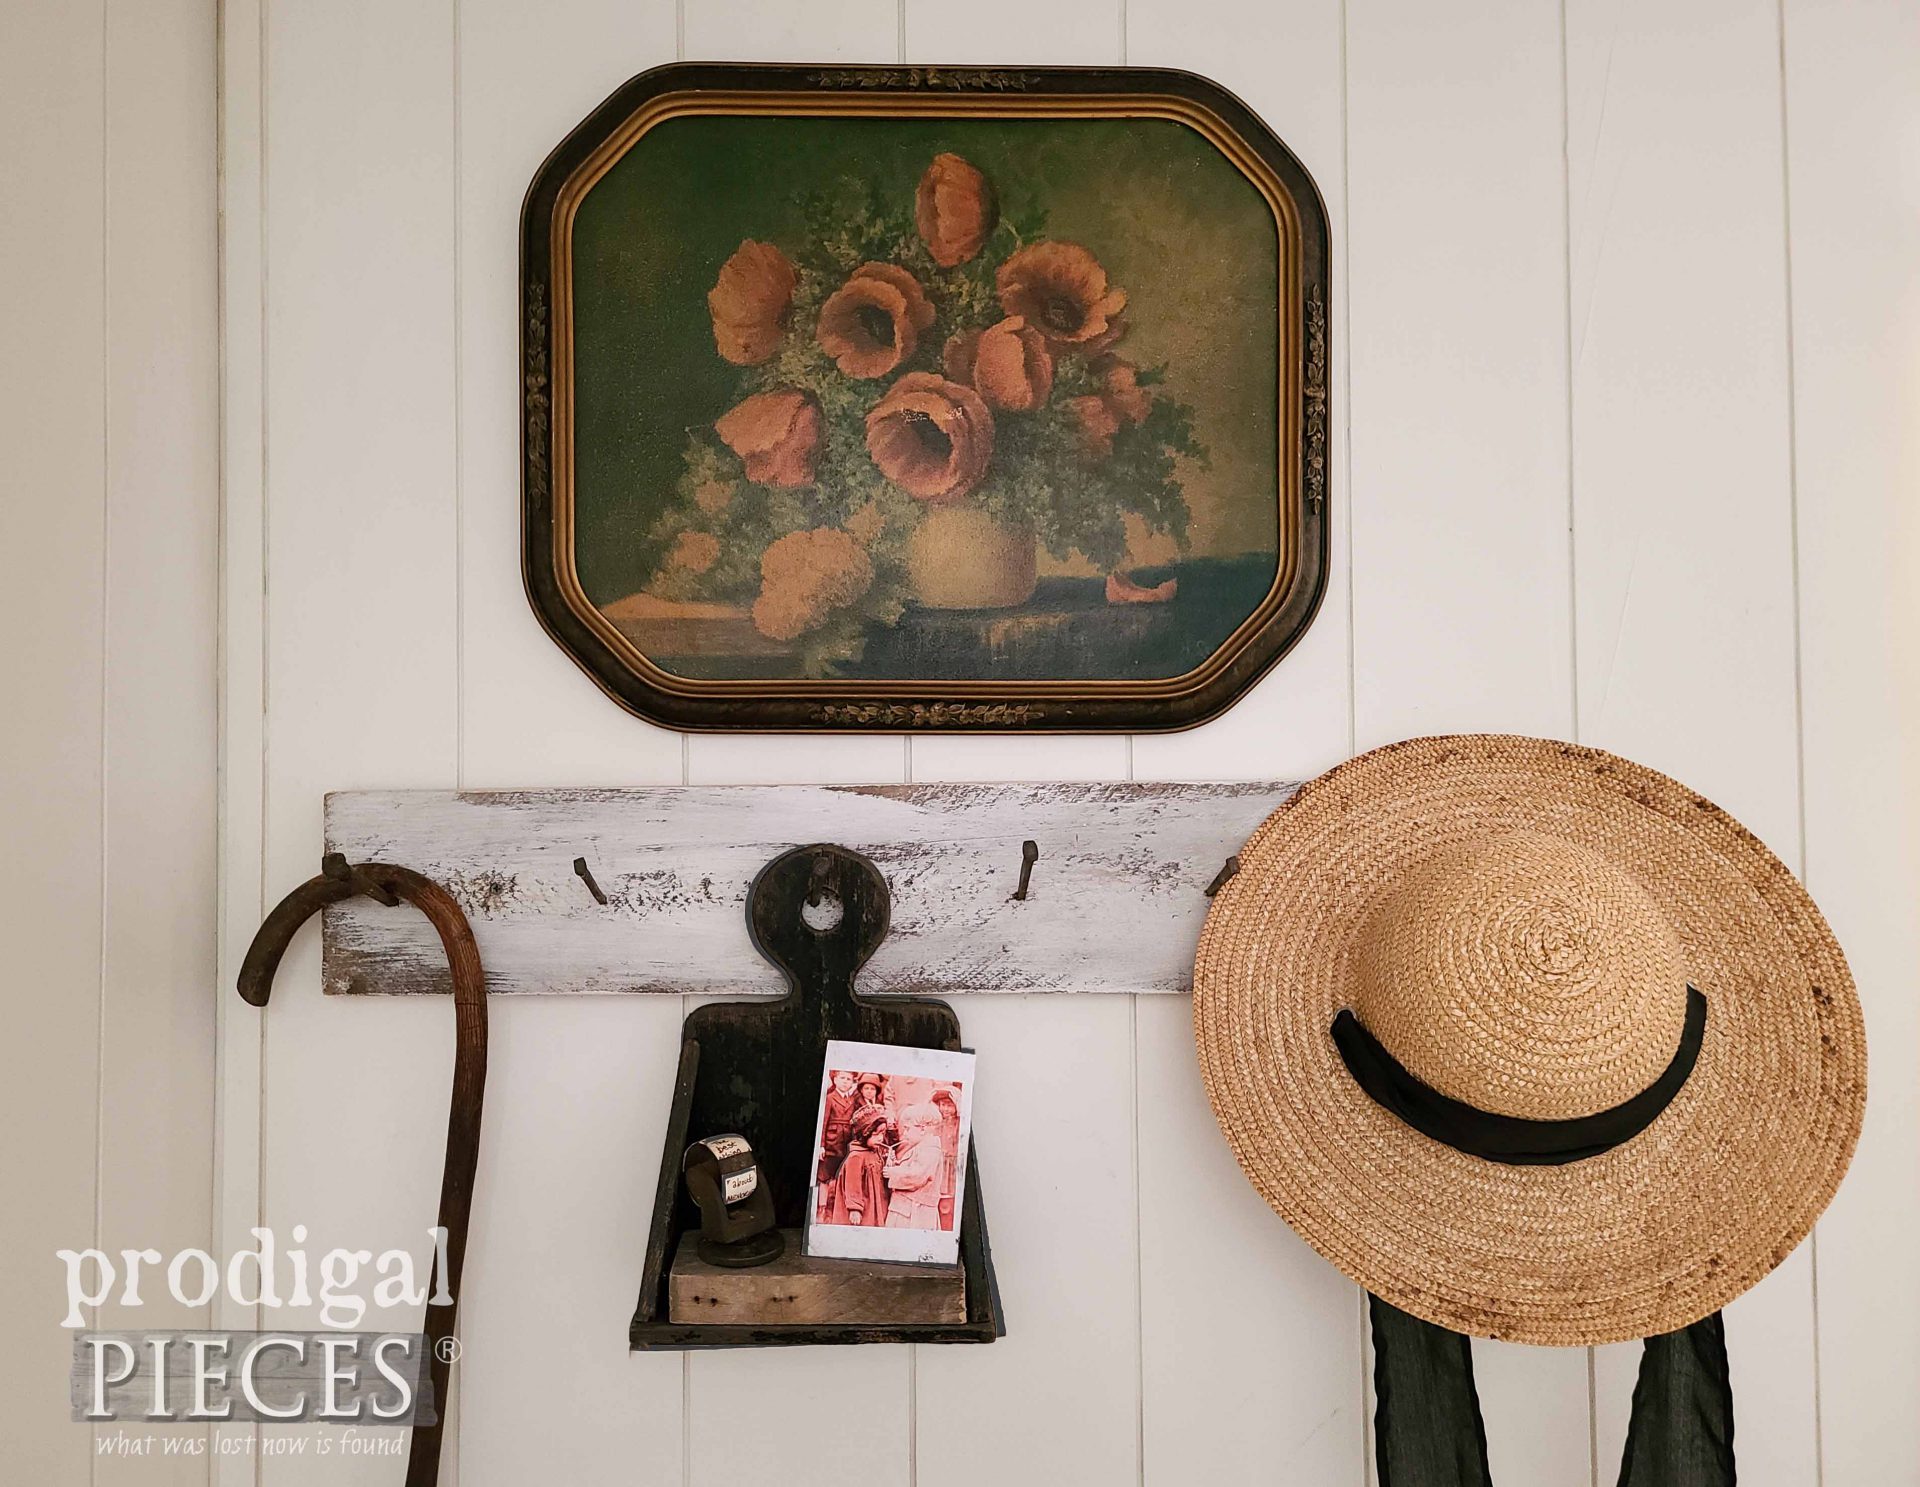 Rustic Chic Farmhouse Style Memory Shelf by Larissa of Prodigal Pieces | prodigalpieces.com #prodigalpieces #farmhouse #diy #home #homedecor